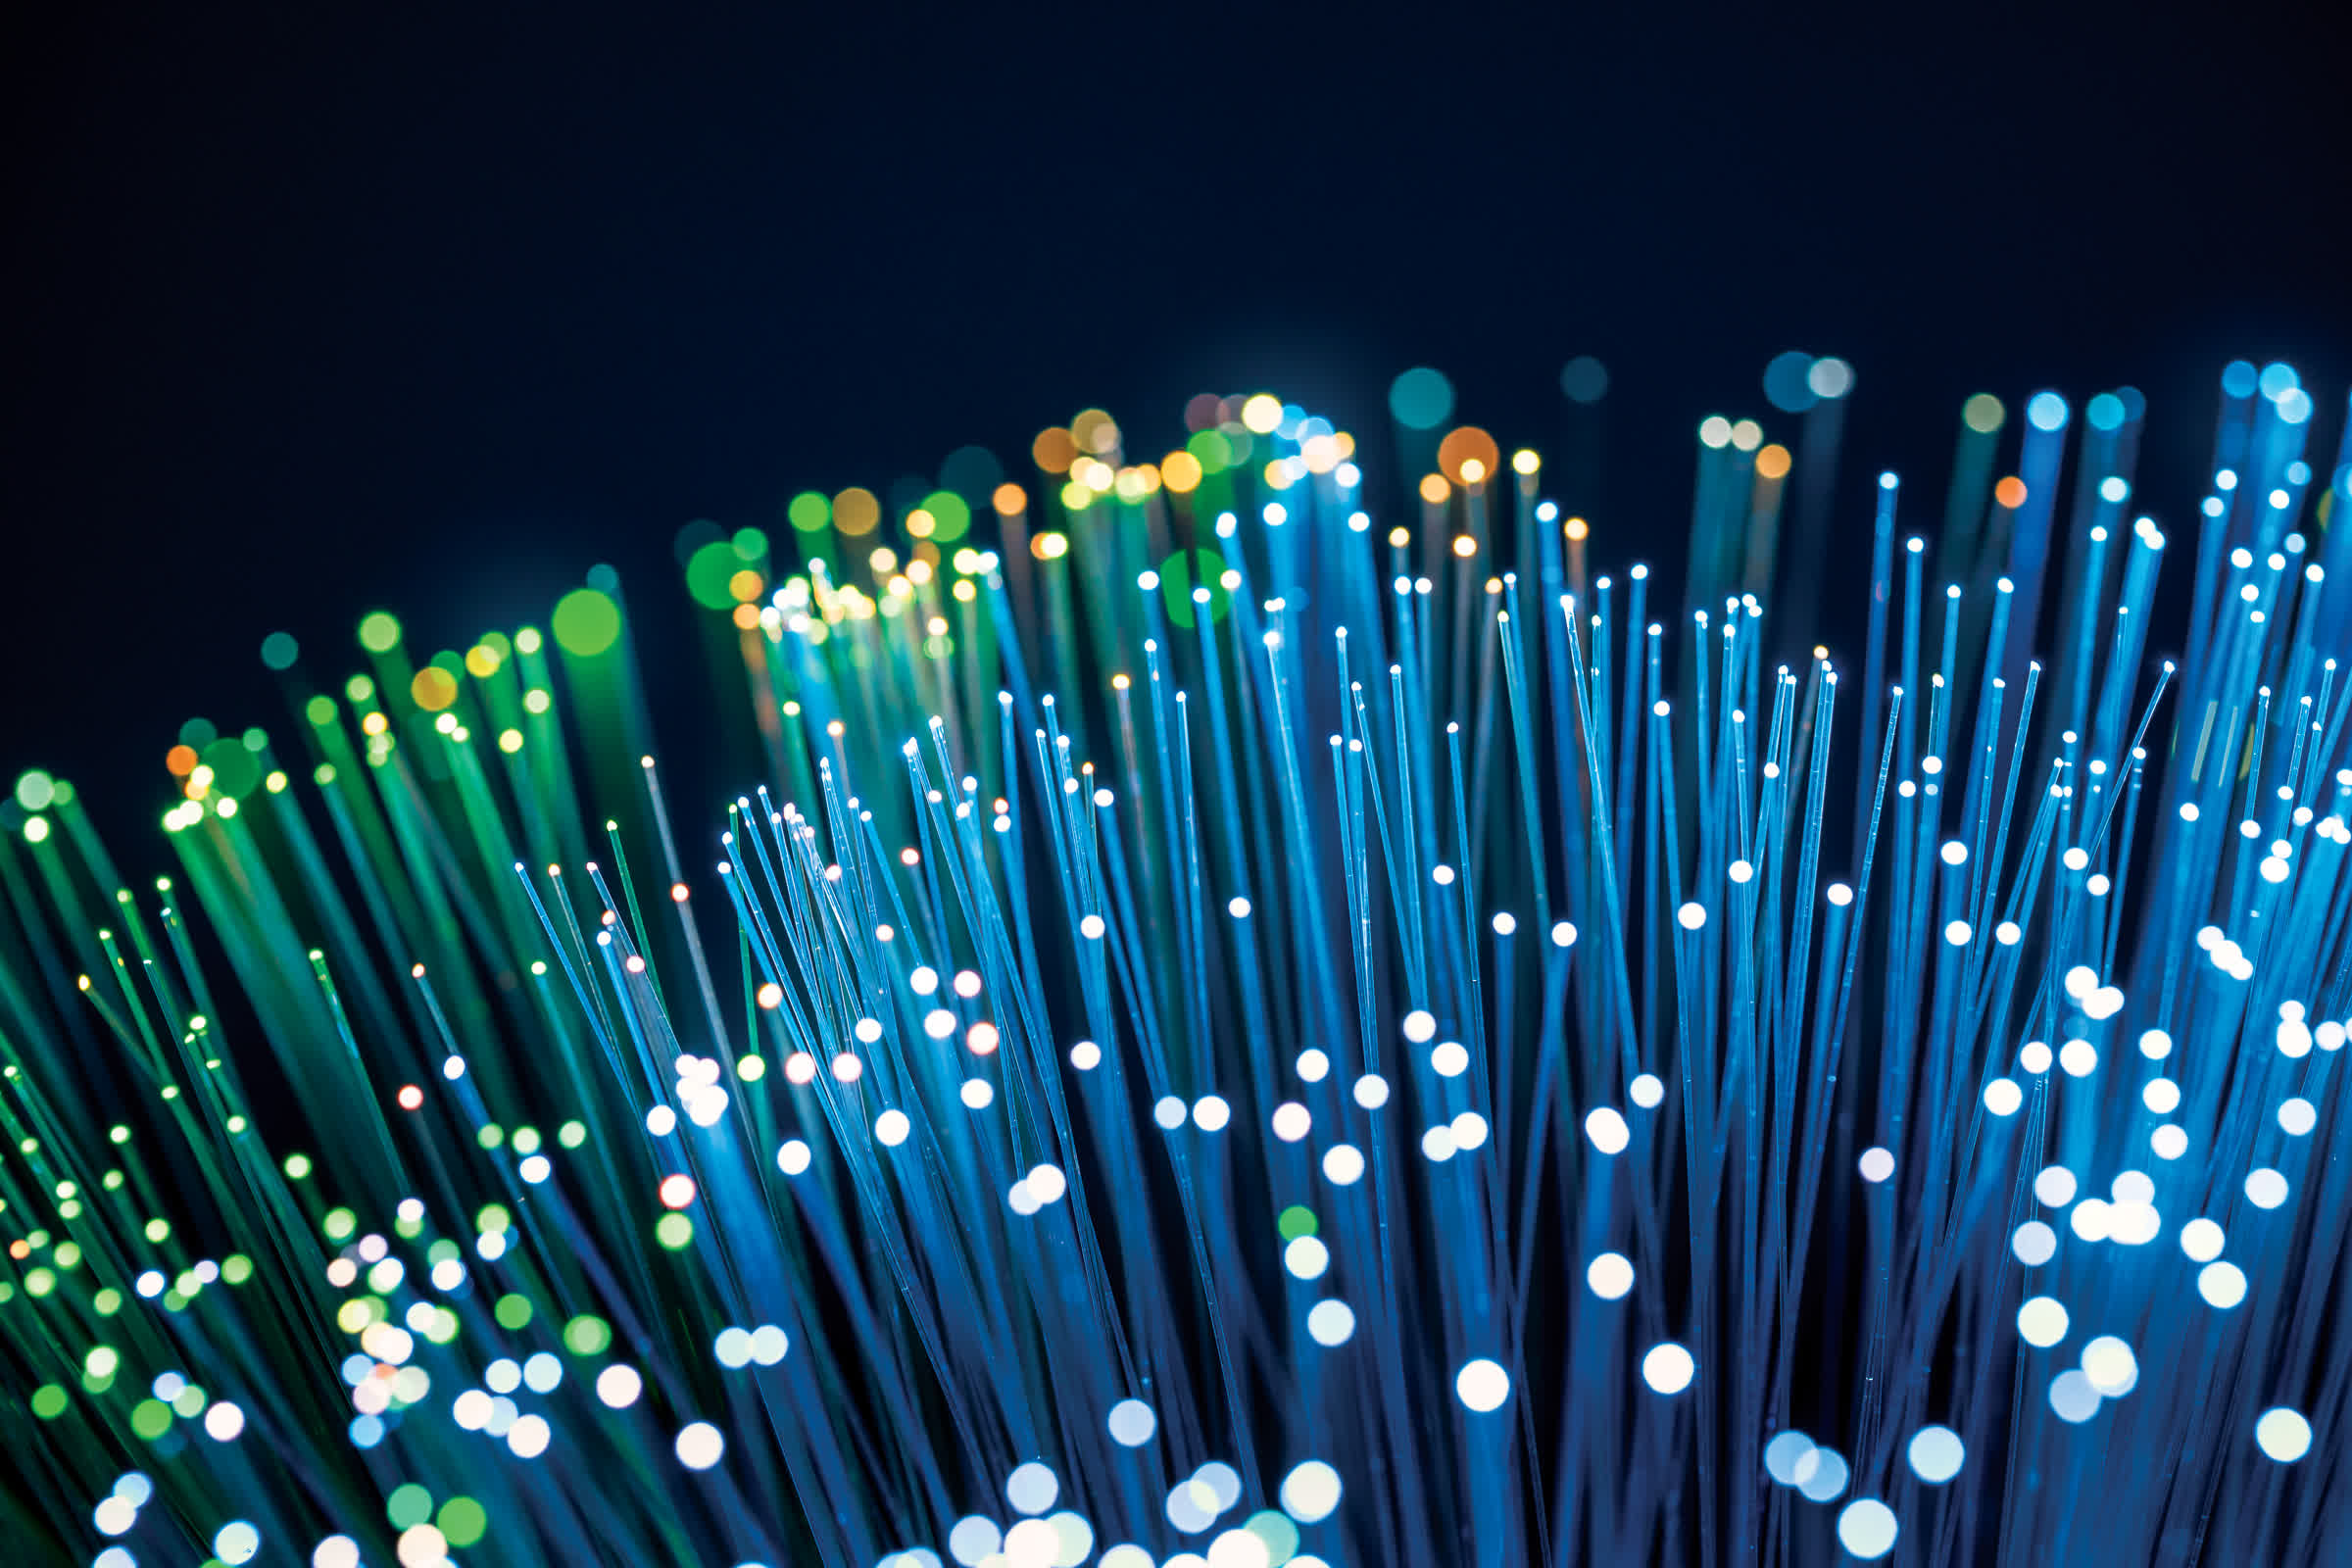 World record set for fiber optic speed transfer at 22.9 petabits per second